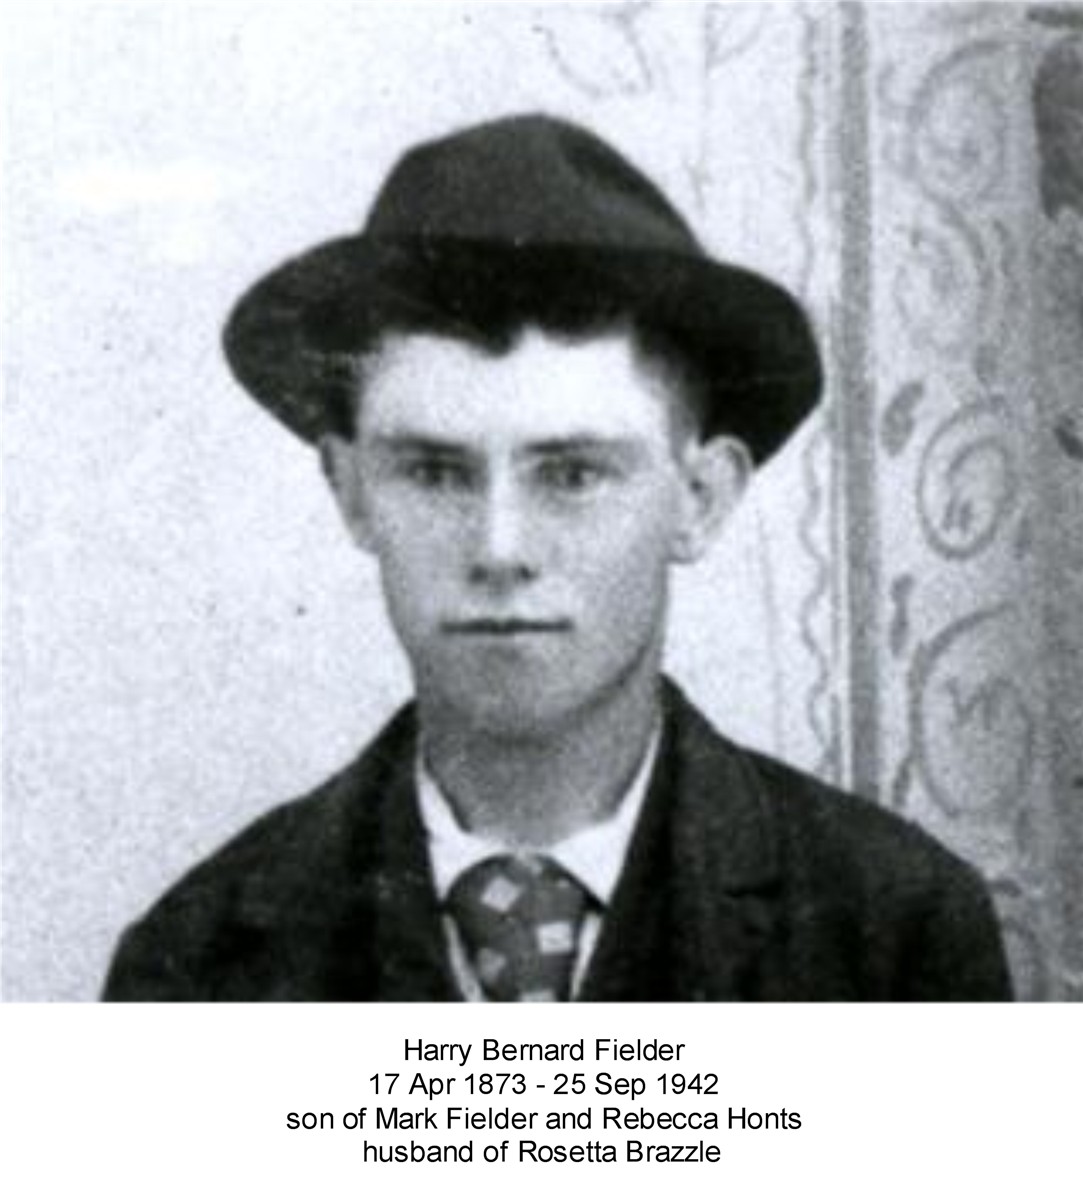 Harry Bernard Fielder